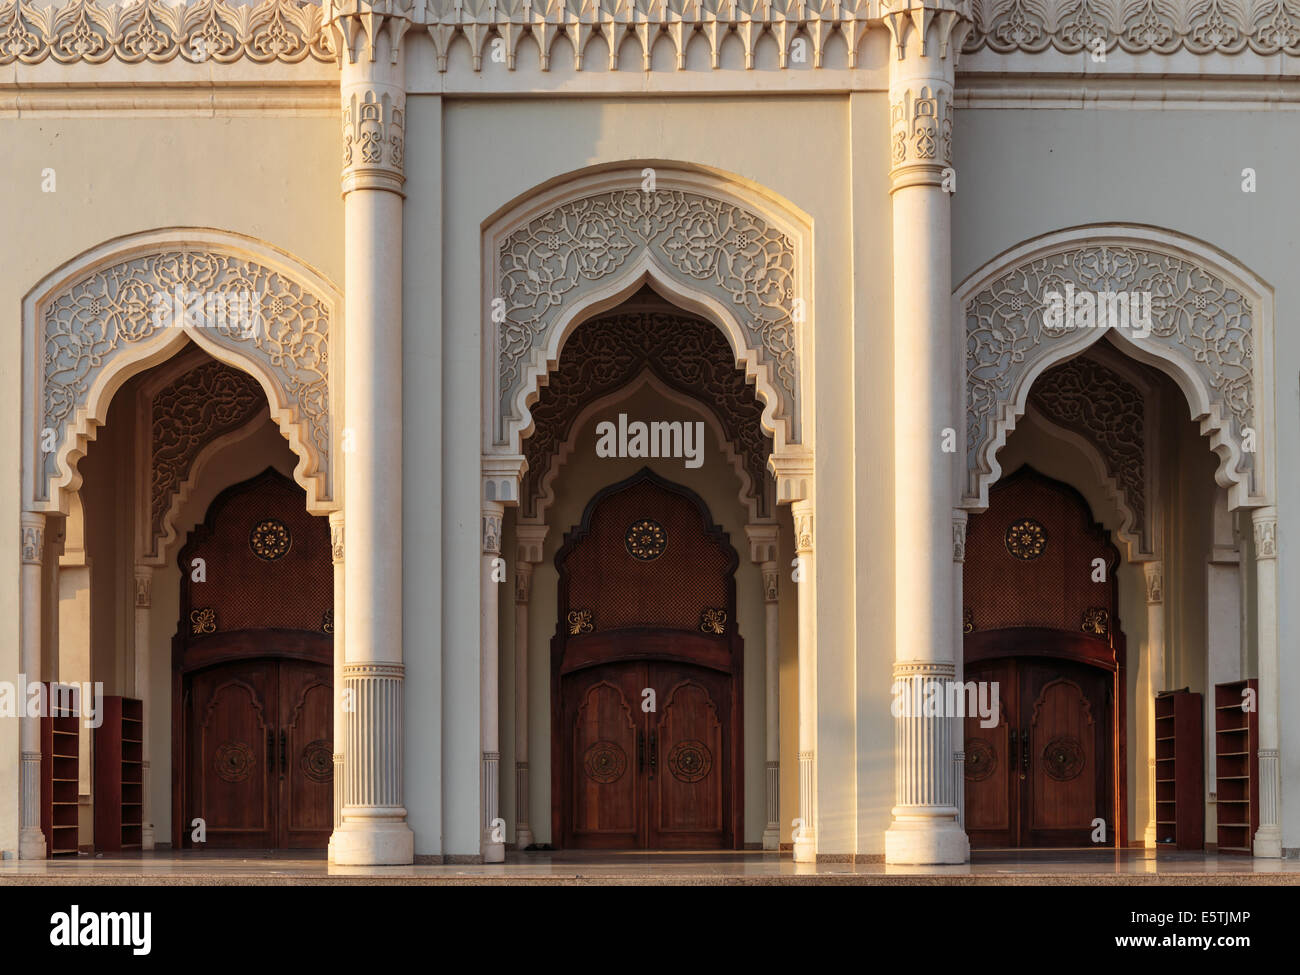 Mosque in Sharjah, United Arab Emirates Stock Photo